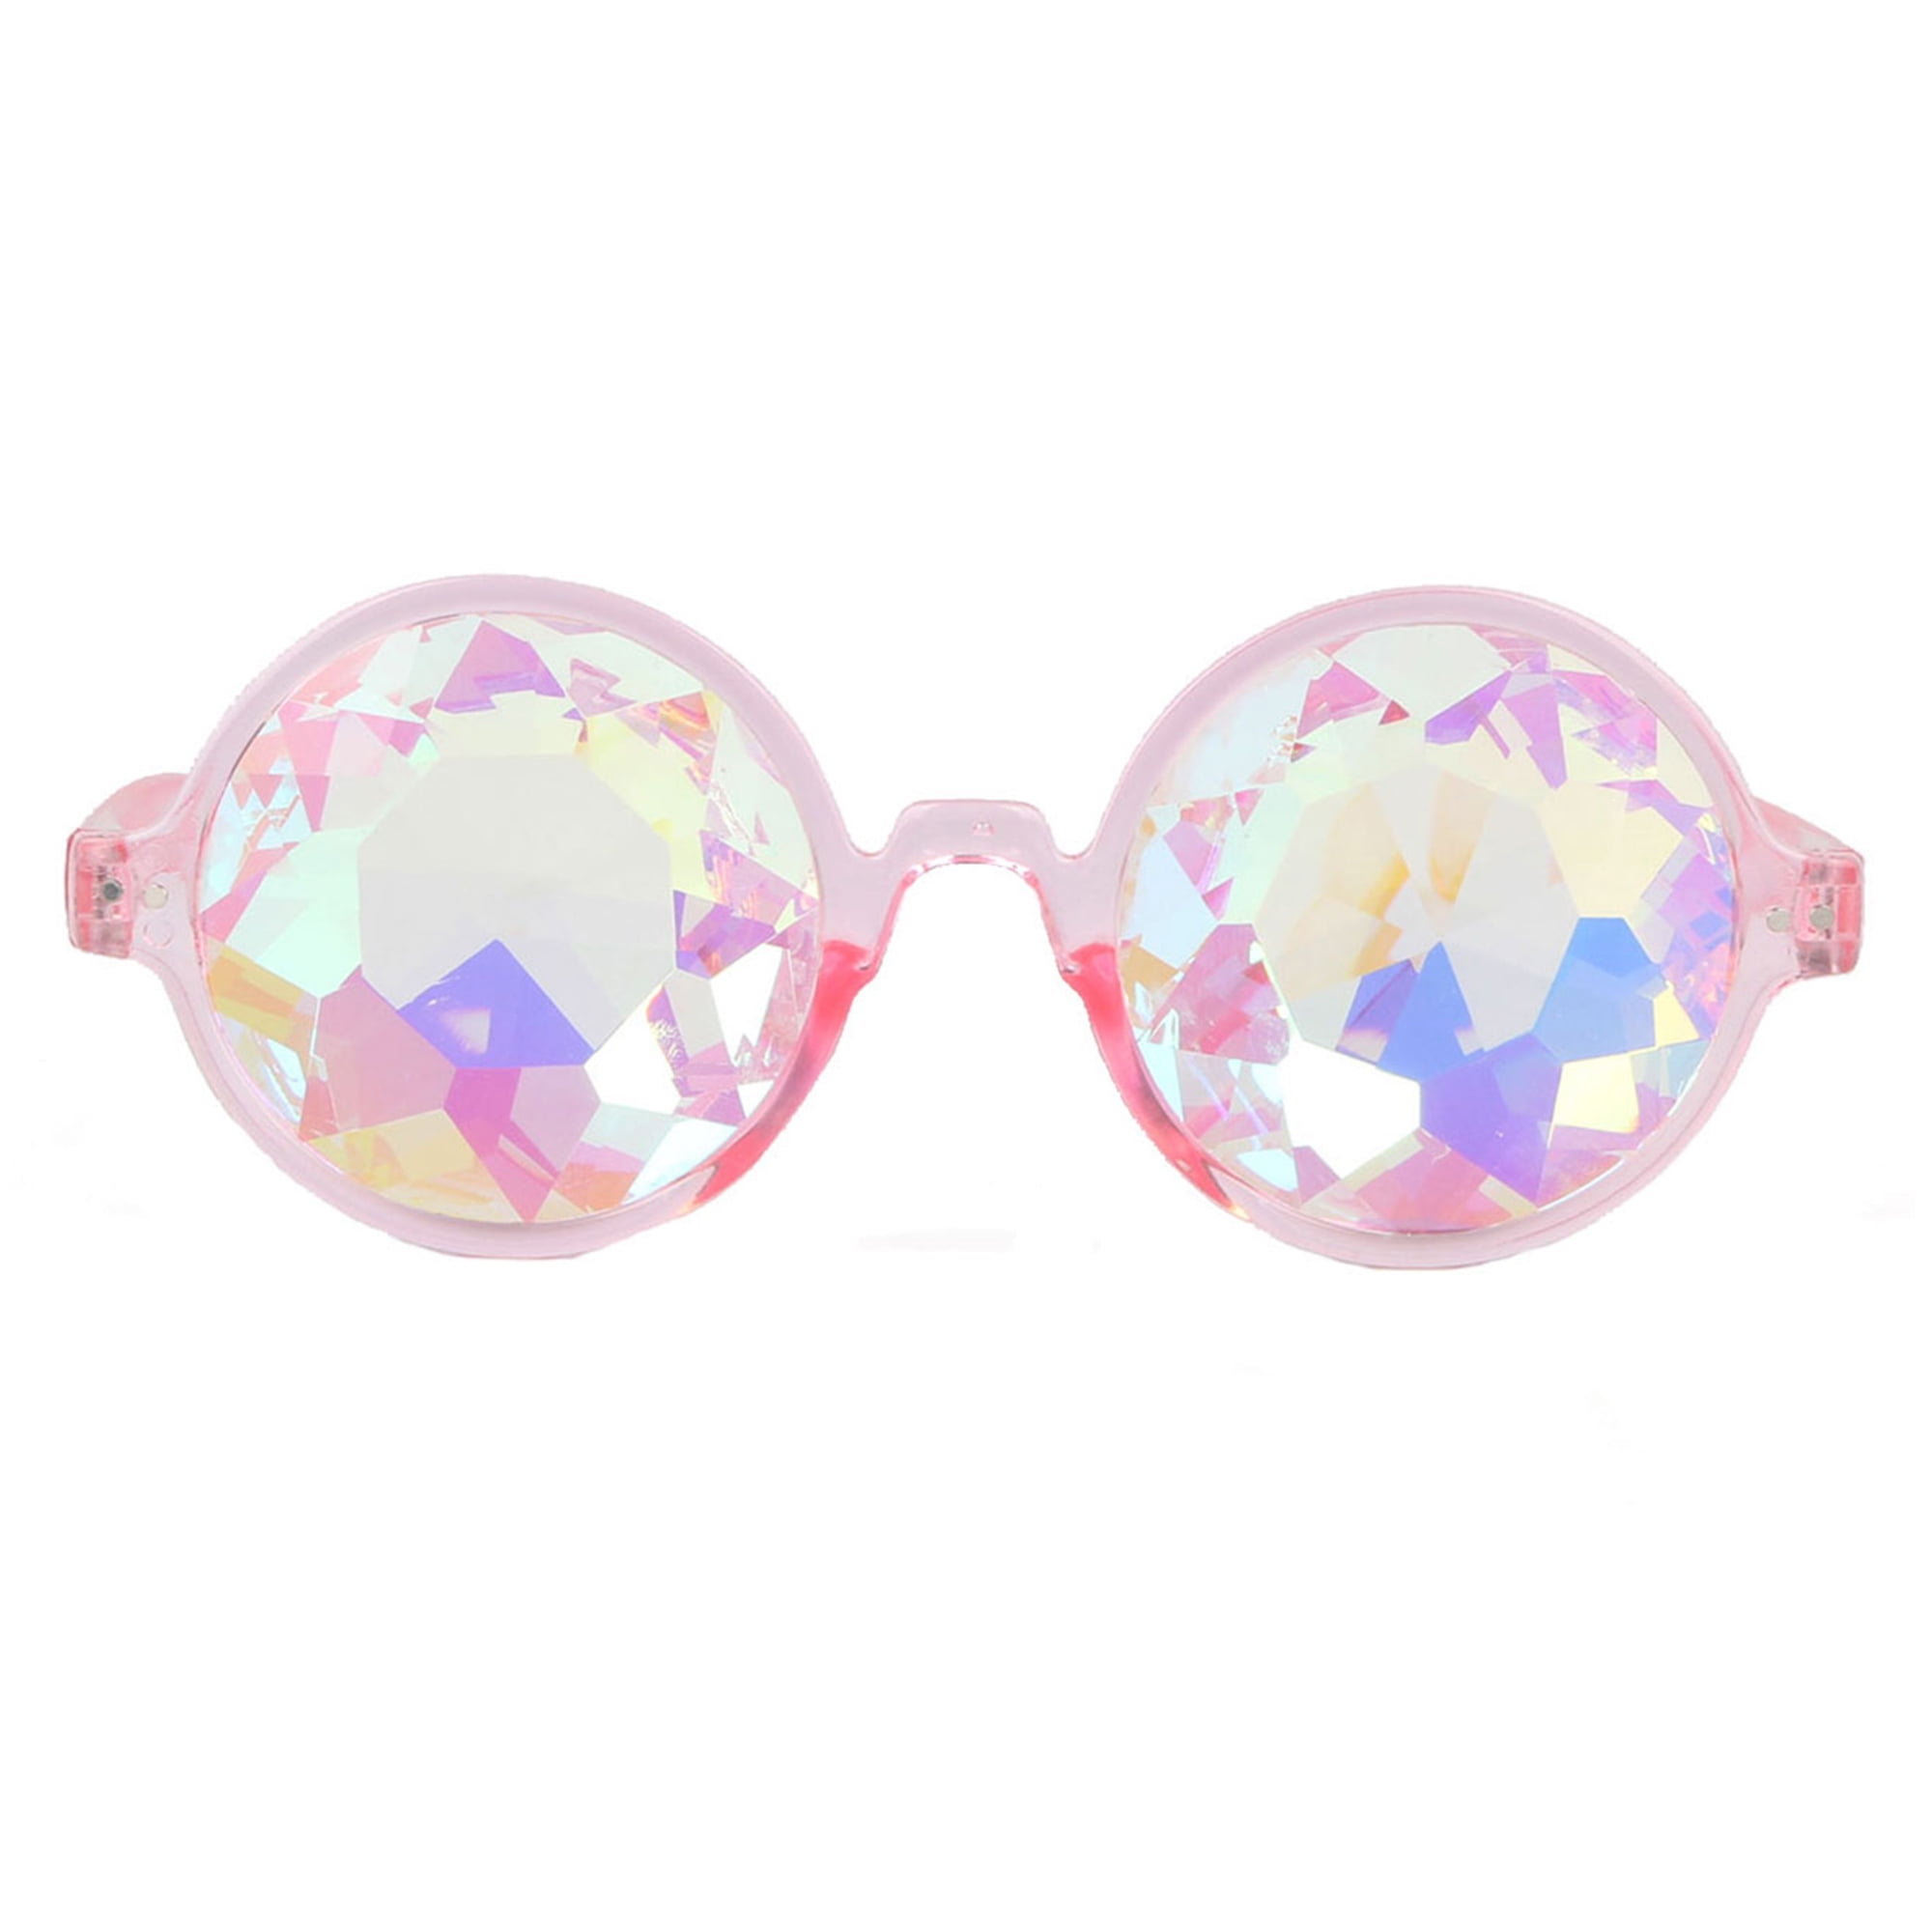 Kaleidoscope Goggles Rainbow Prism Sunglasses for Rave Party Festival Decoration Favors Black 